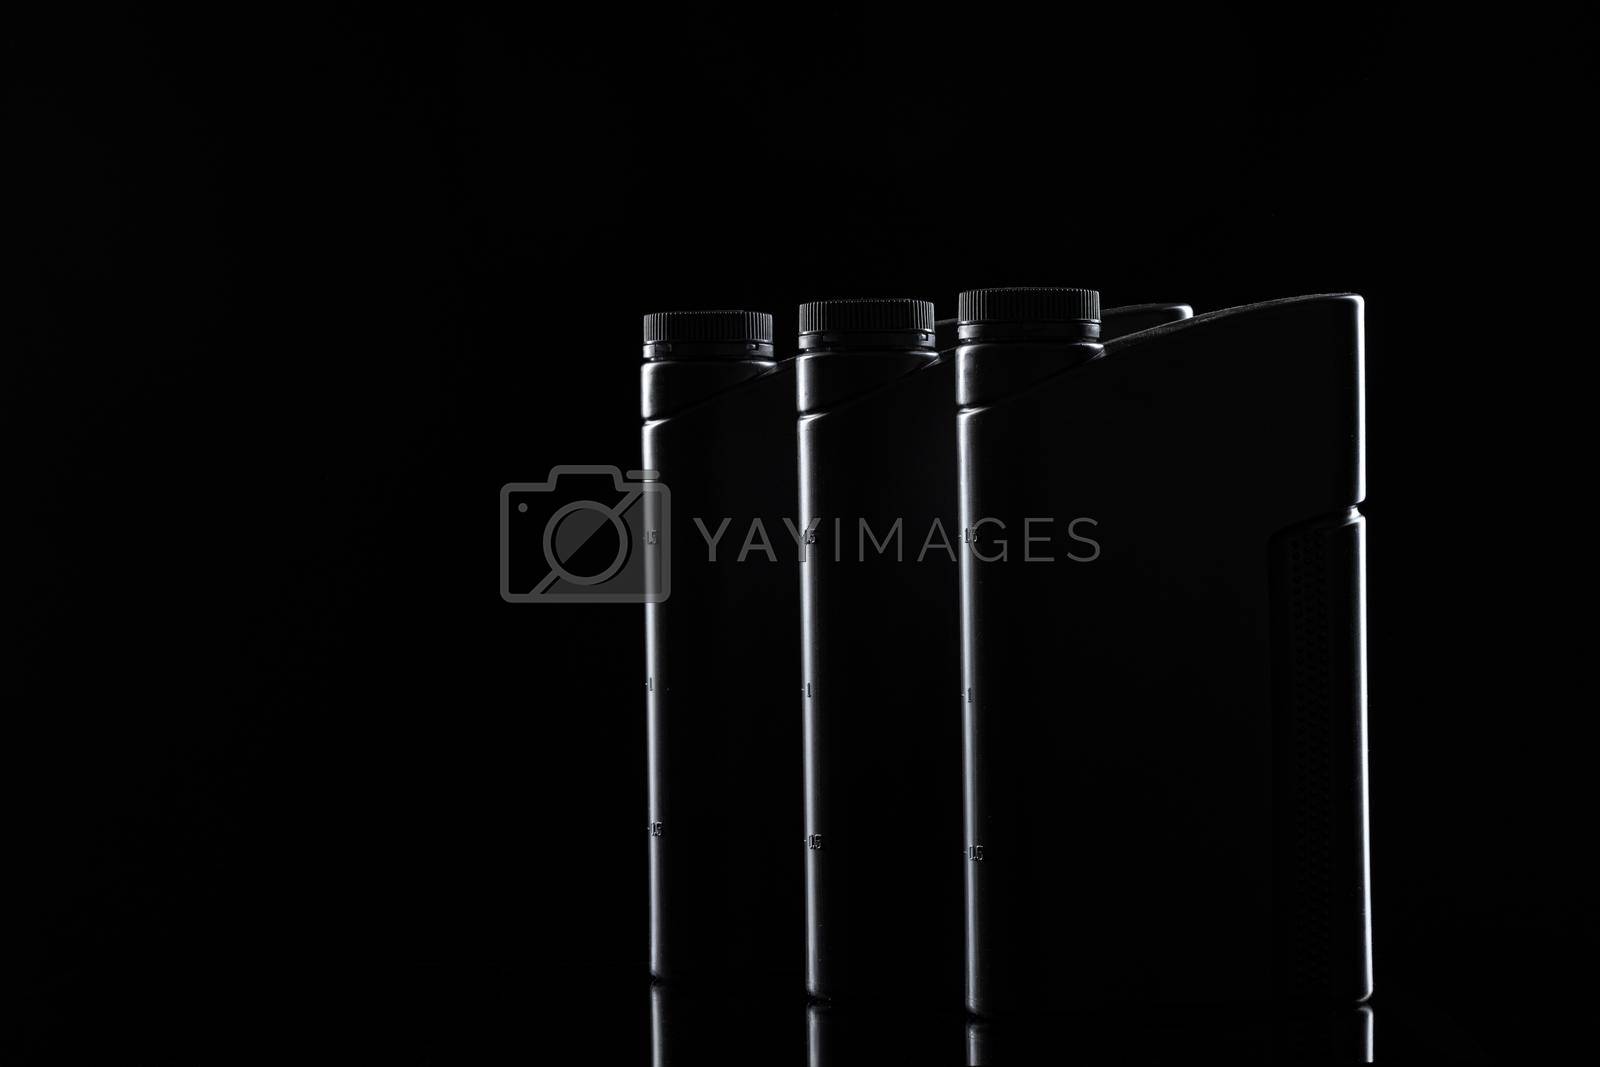 Royalty free image of Engine oil bottle on black background, close up. by Fabrikasimf